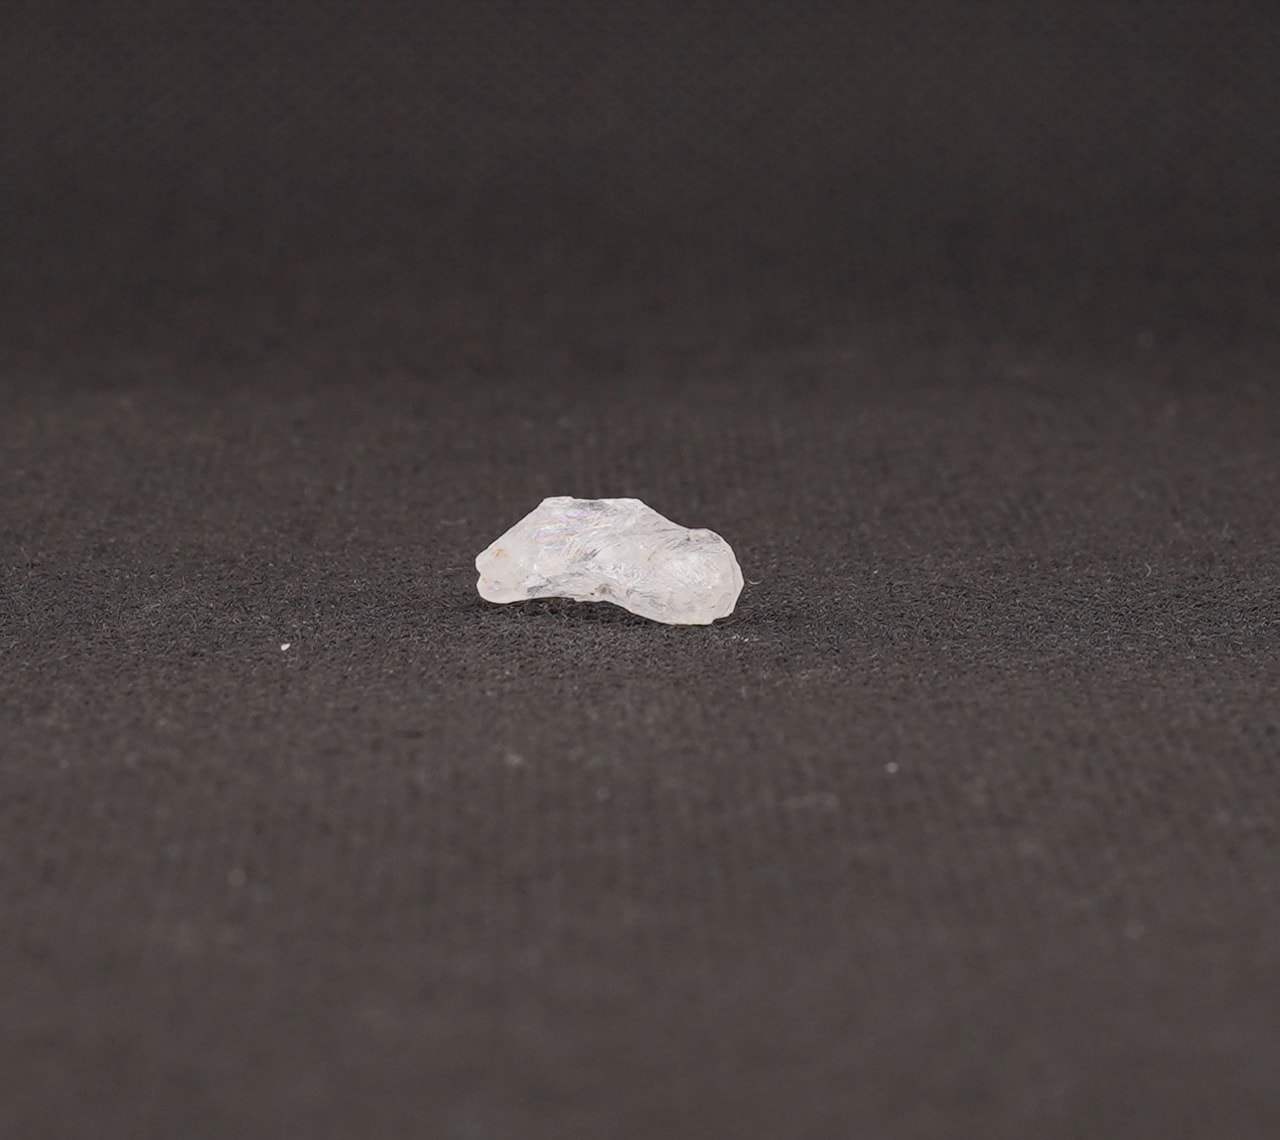 Fenacit nigerian cristal natural unicat f222